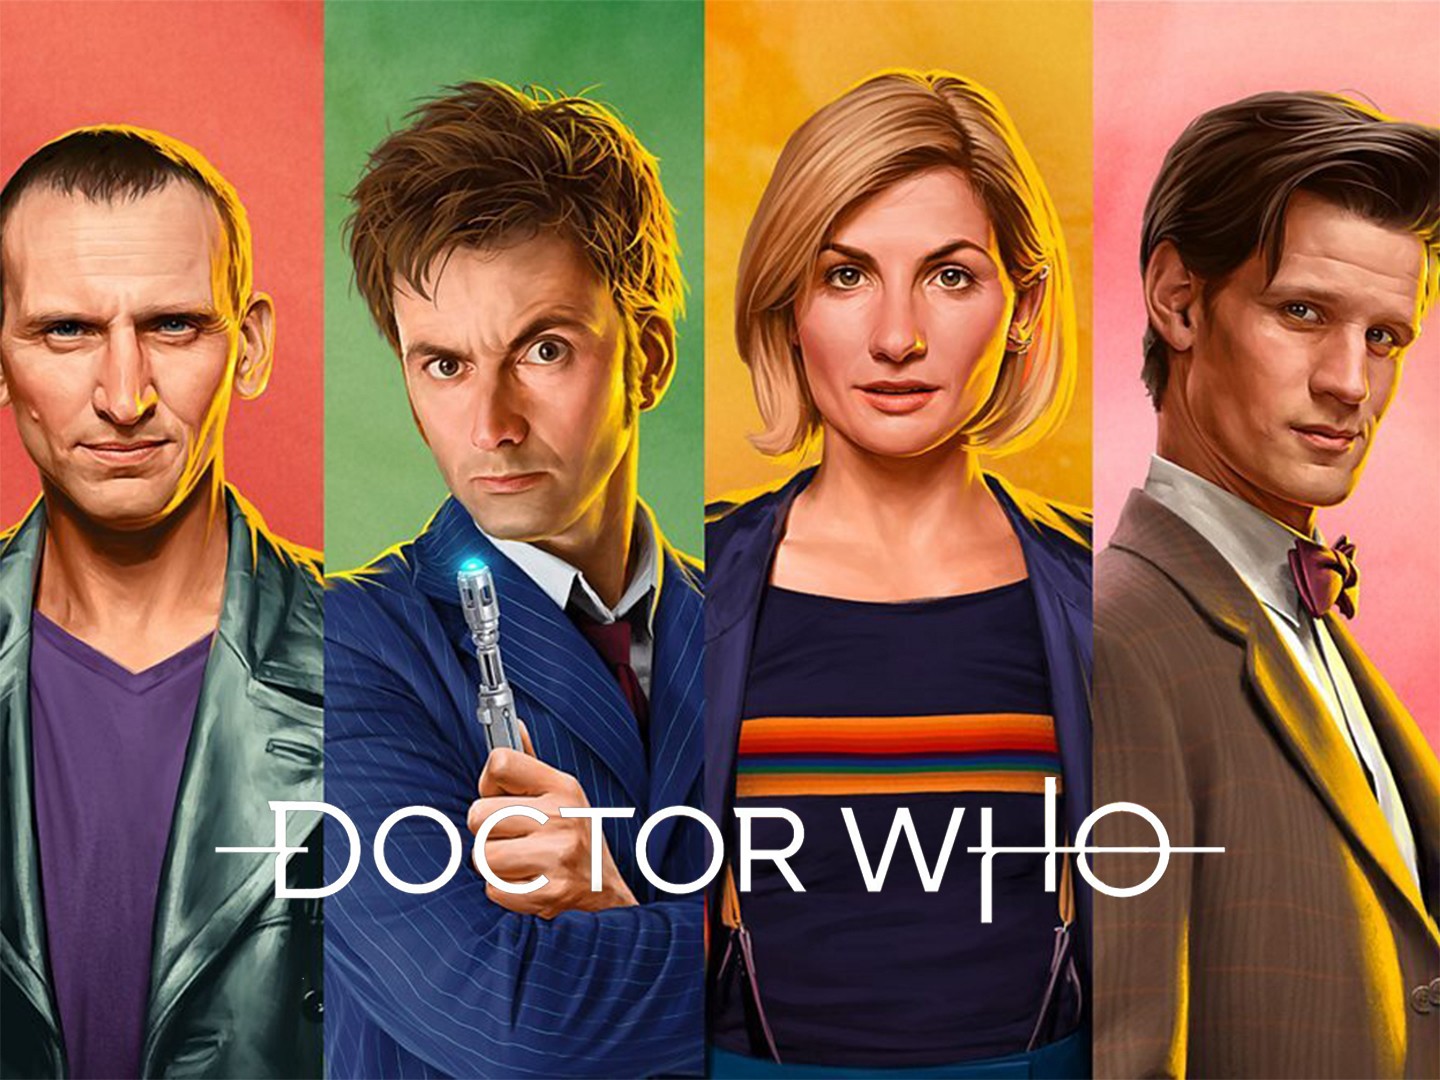 Prime Video: Doctor Who - Season 12